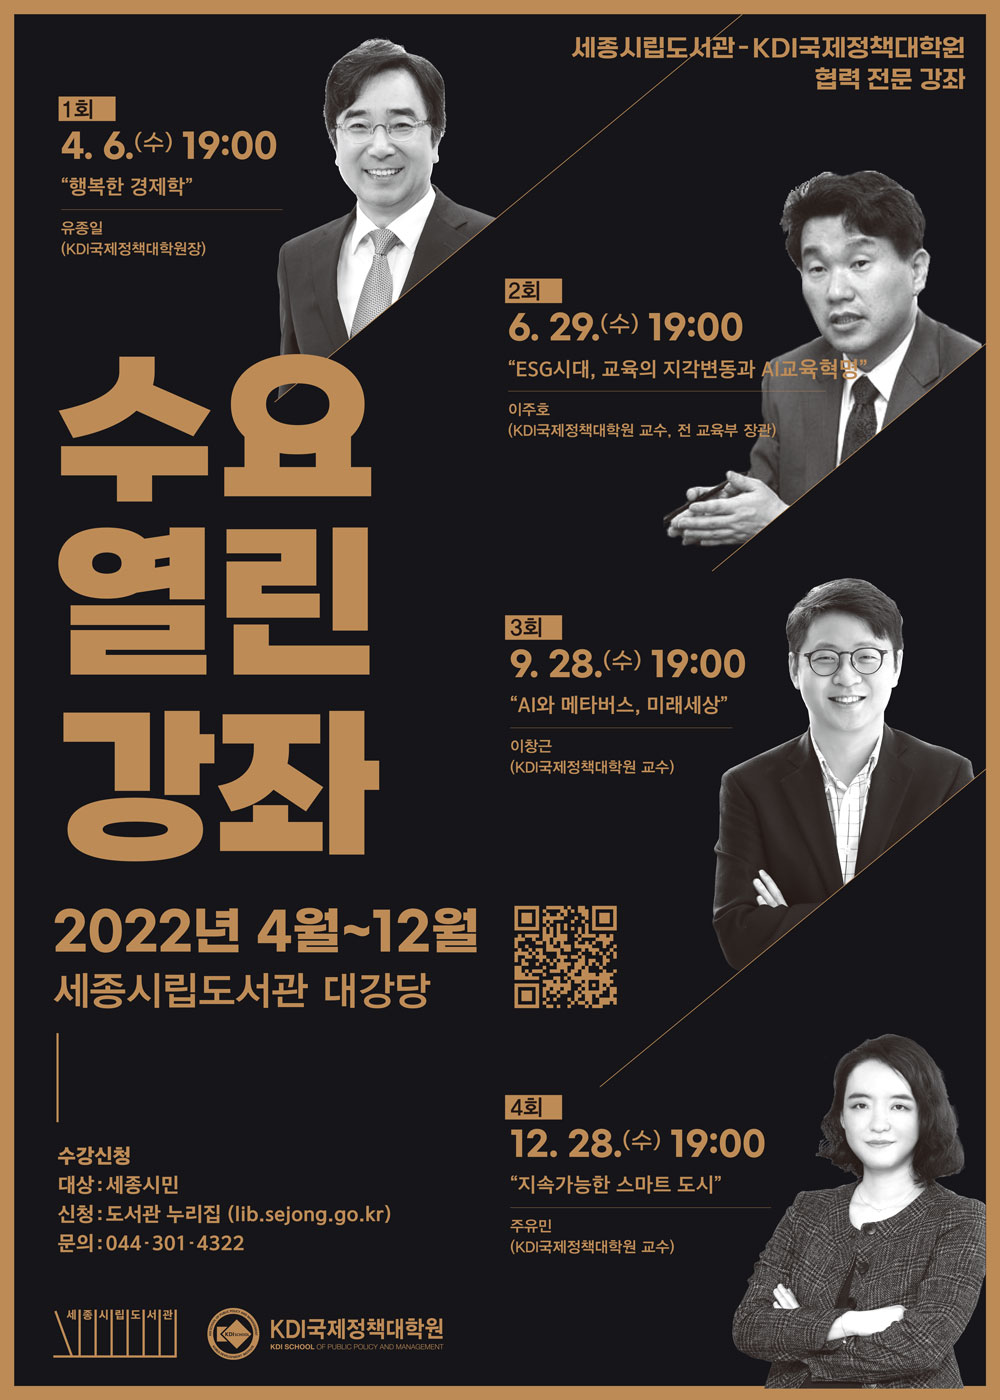 [Invitation] KDI대학원-세종시립도서관 <제 3회 수요열린강좌> (9월 28일(수) 오후 7시)